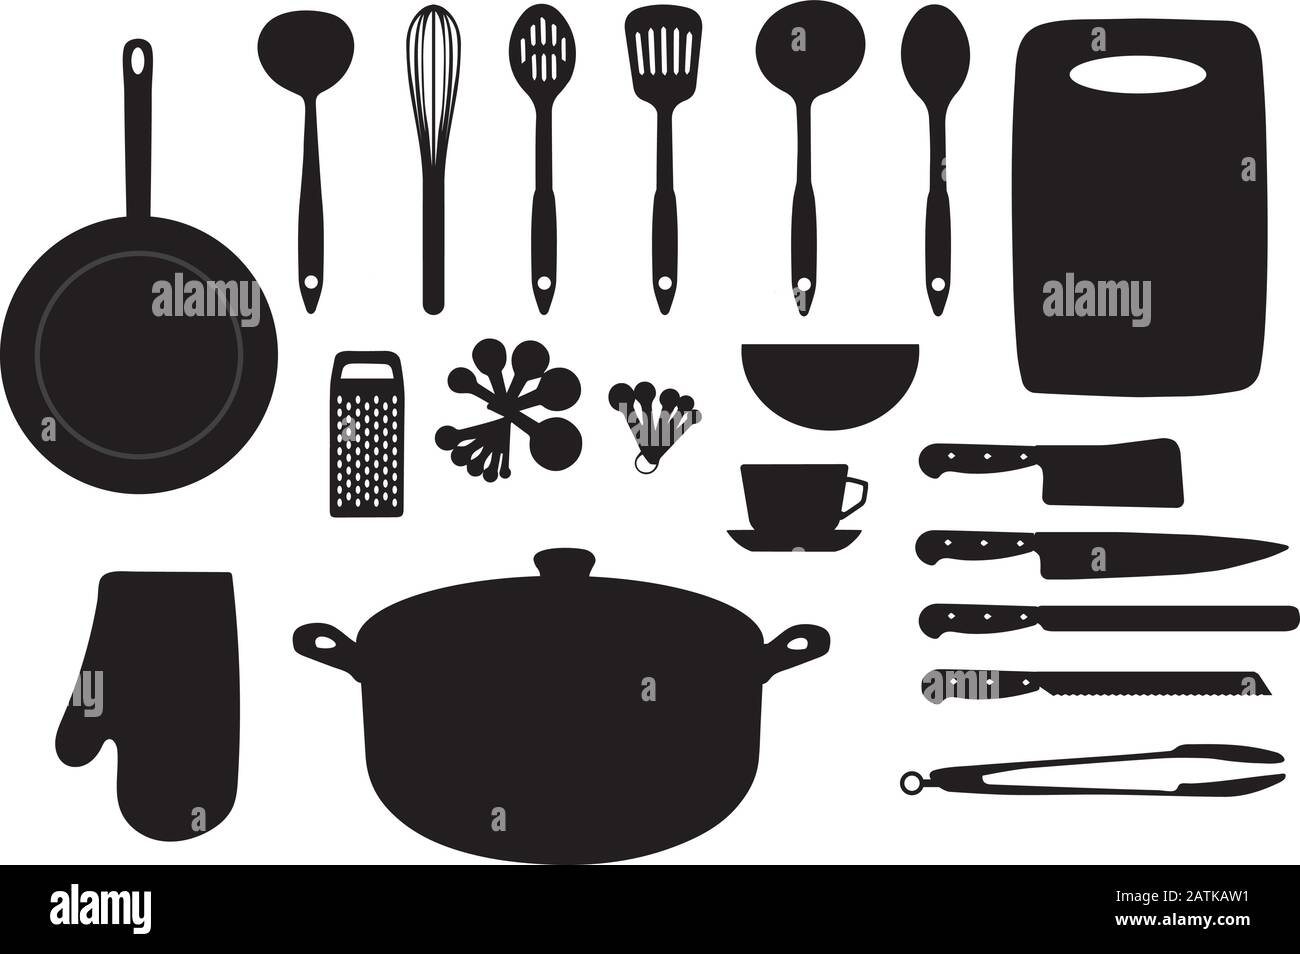 https://c8.alamy.com/comp/2ATKAW1/vector-illustration-of-kitchen-utensils-kitchen-logo-set-2ATKAW1.jpg